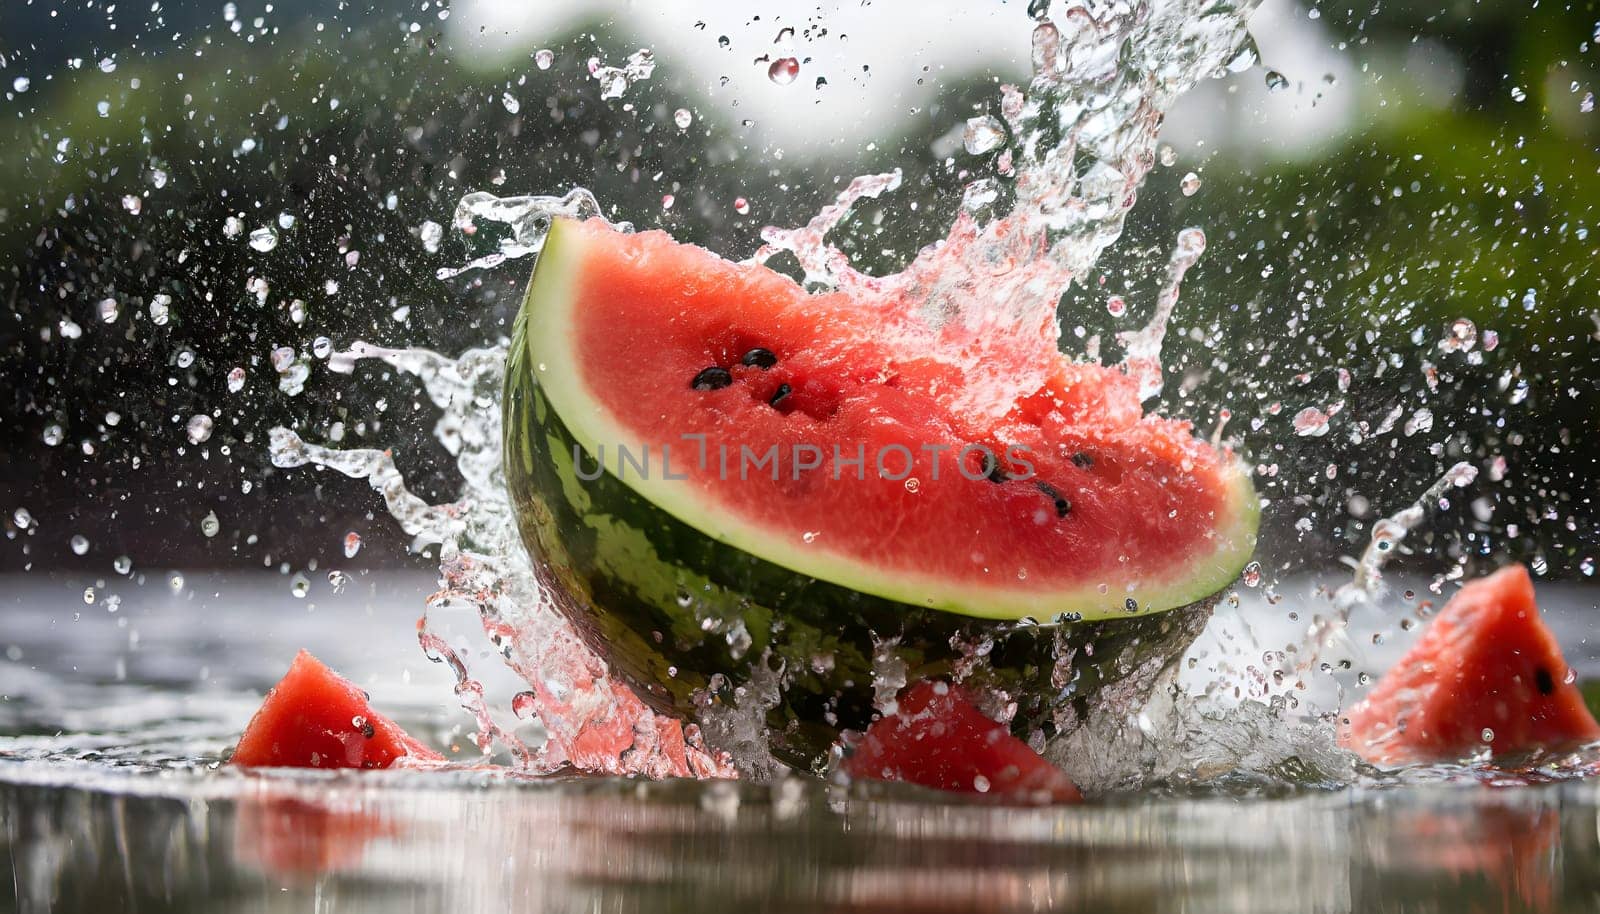 A watermelon drops, splashing water around. High quality photo